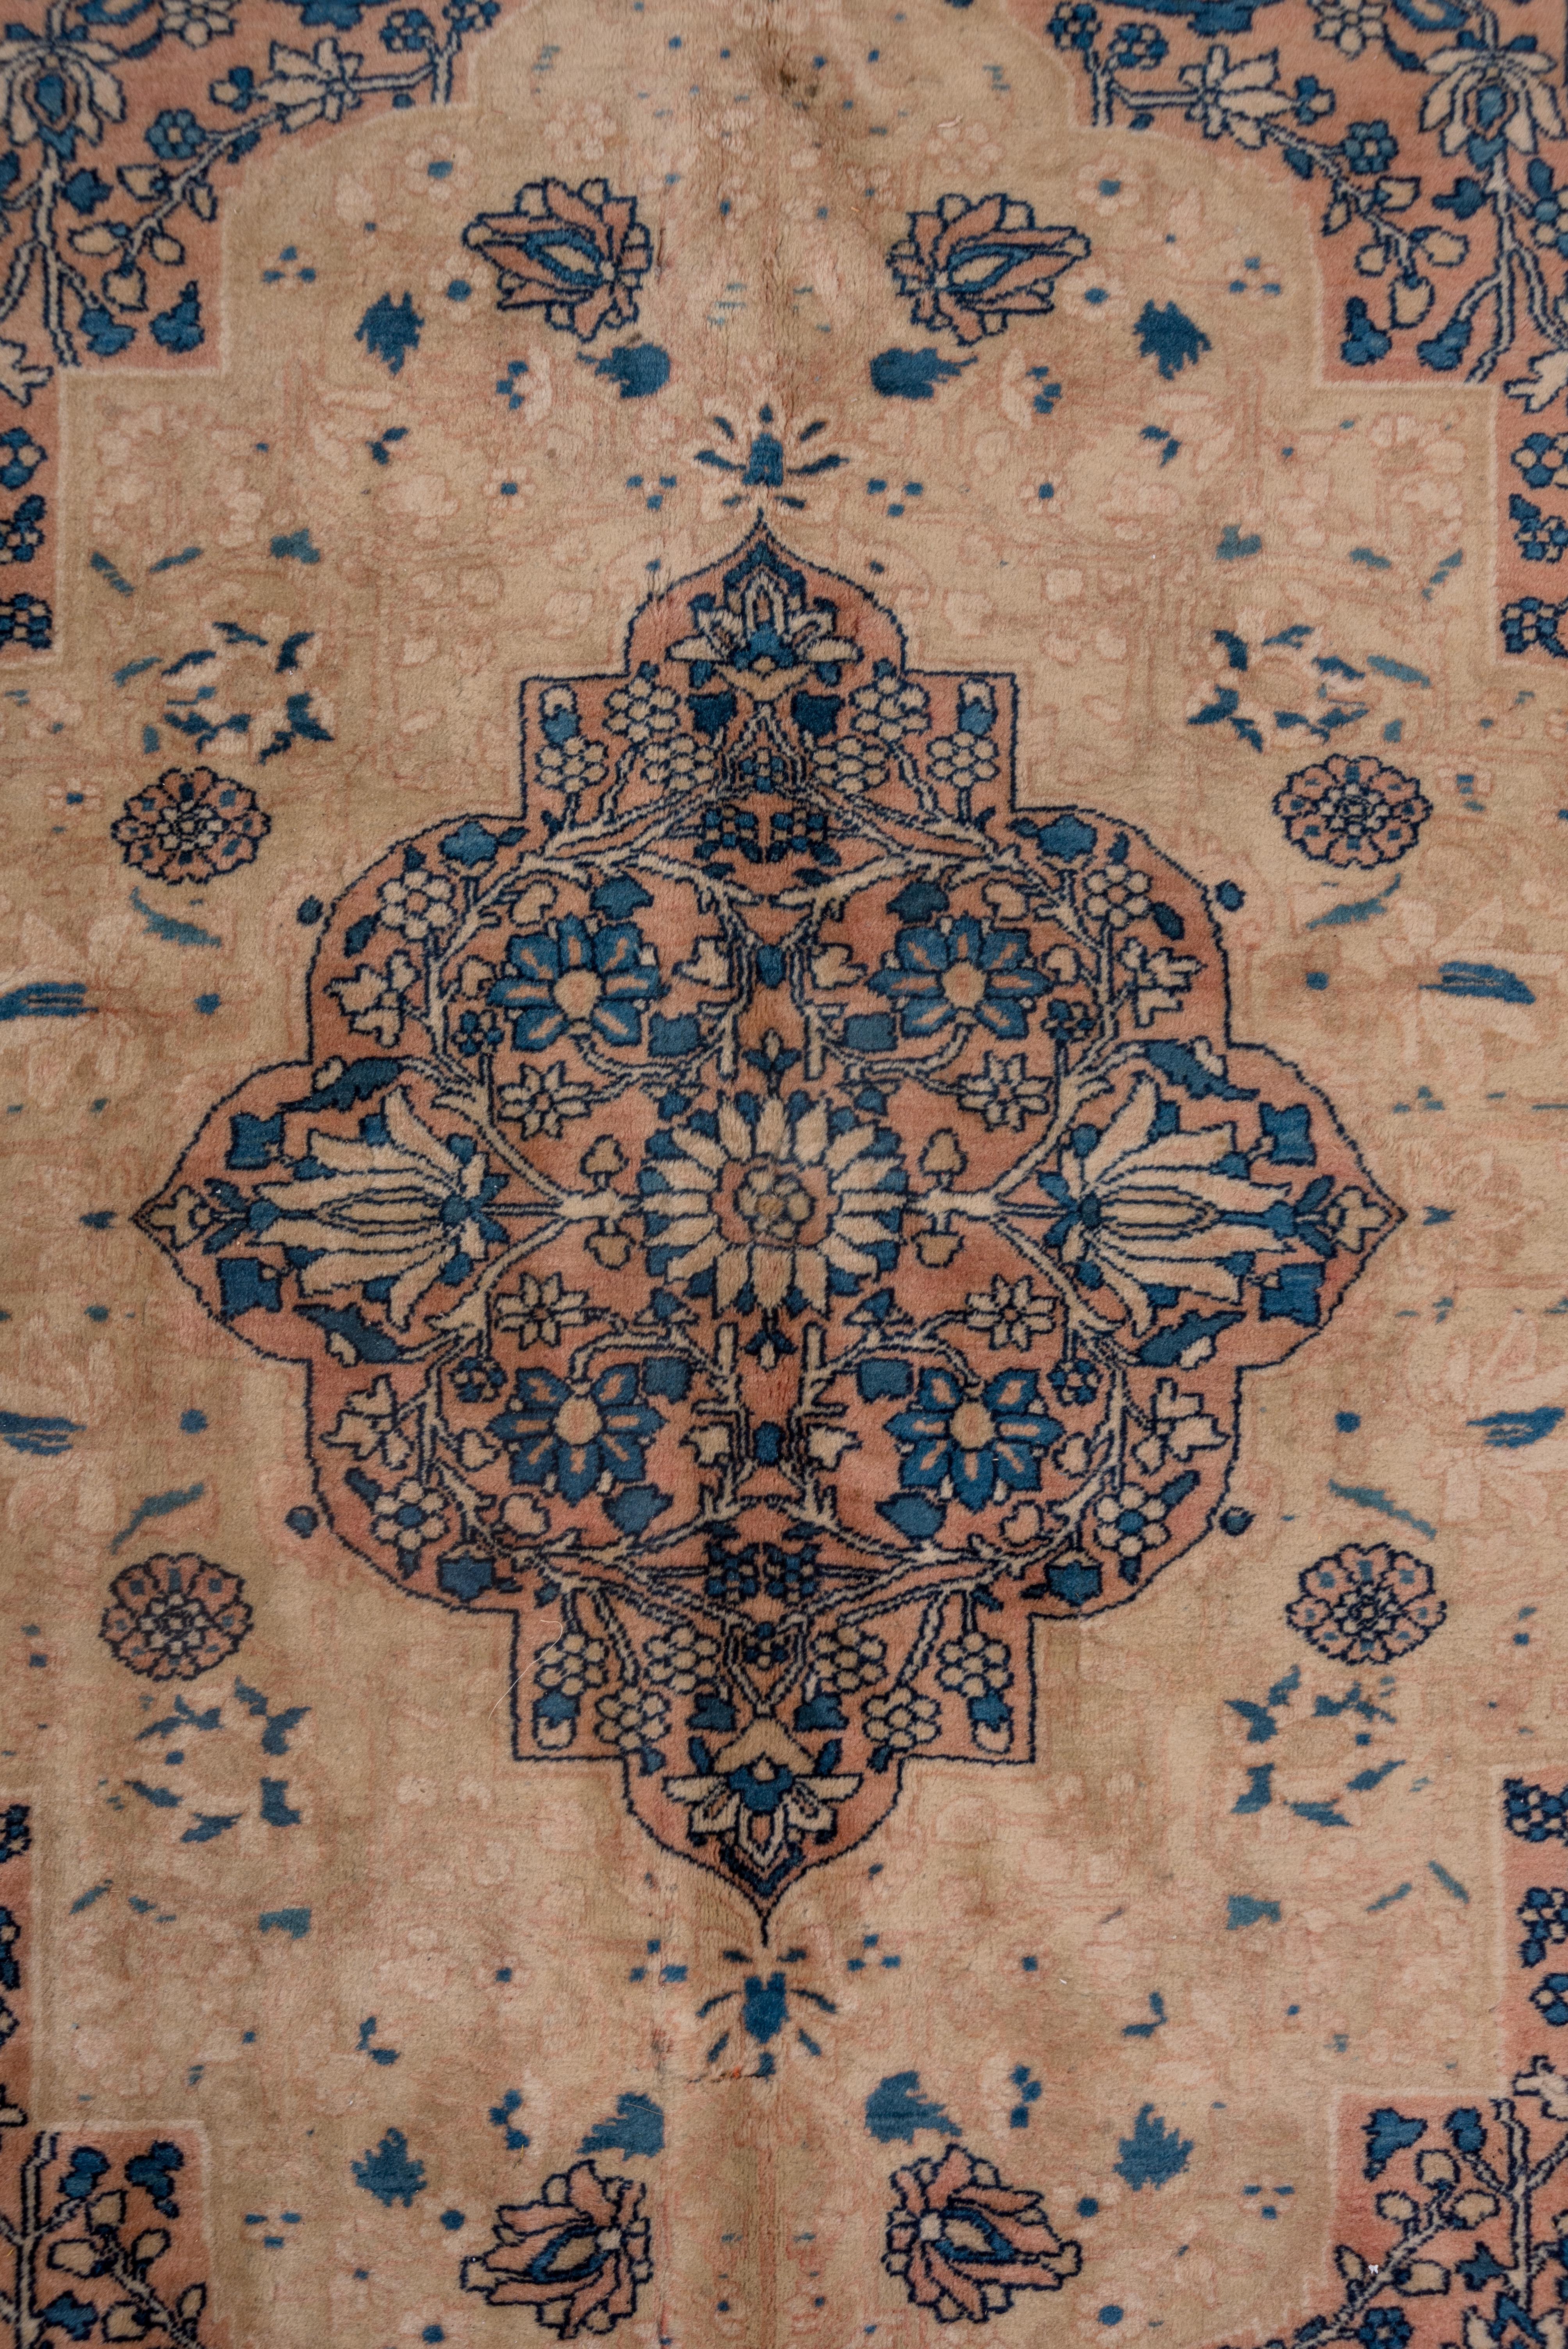 Early 20th Century Rare Antique Mohtasham Kashan Carpet, Navy Field, Mansion Carpet For Sale